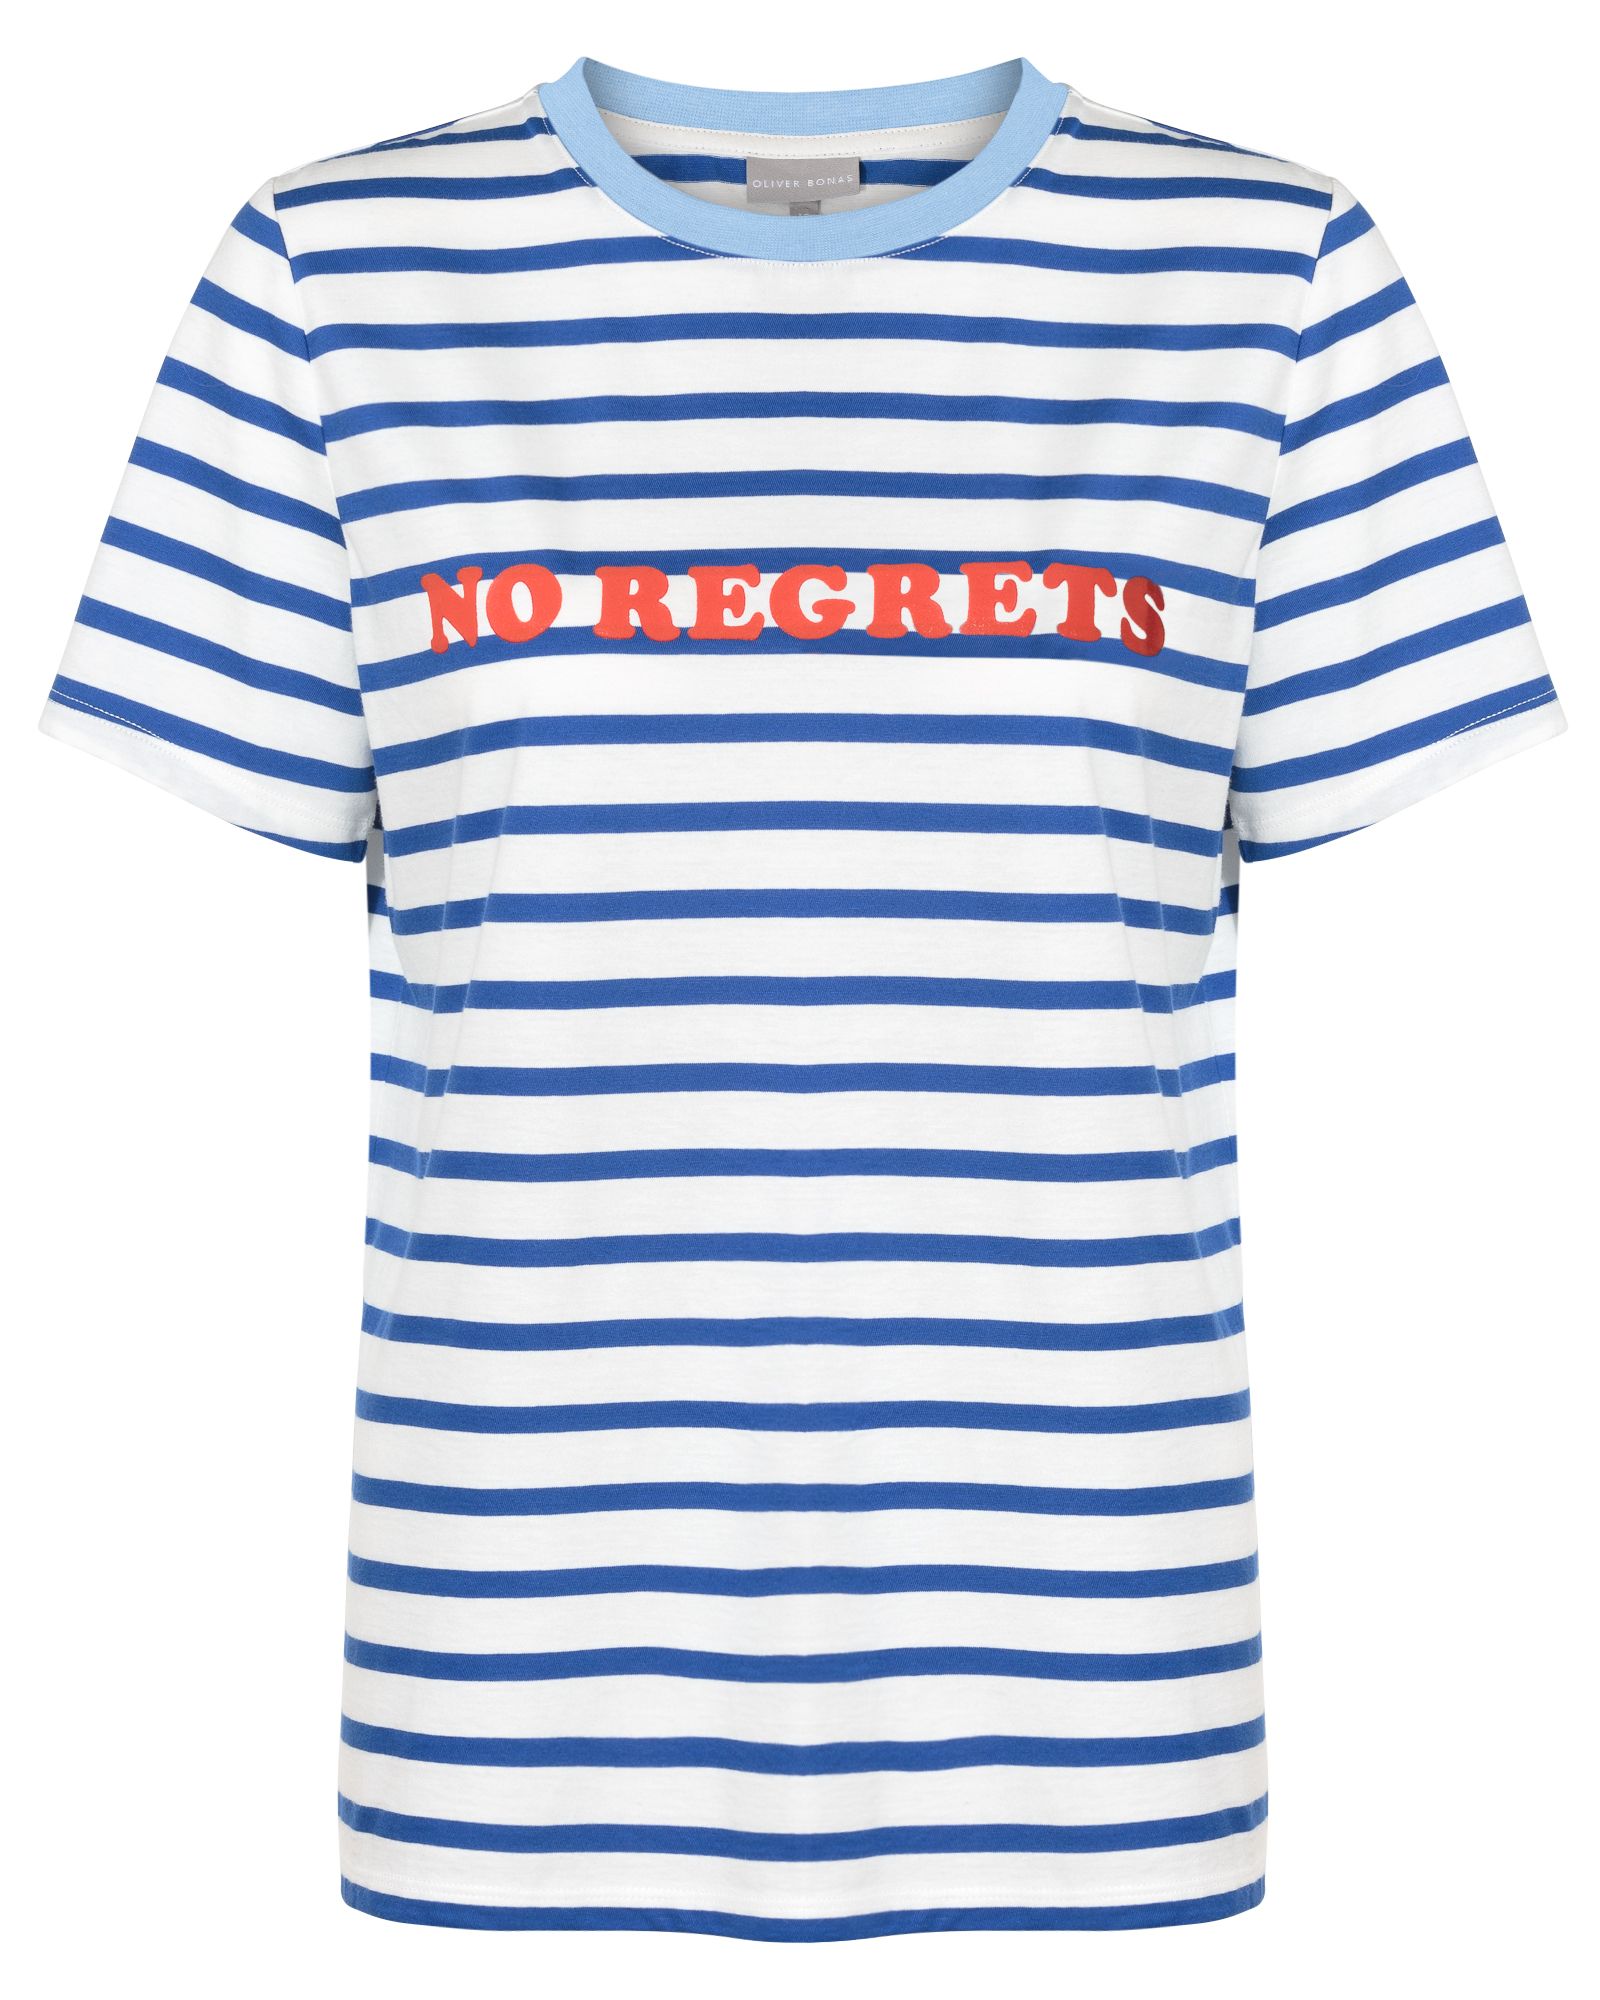 No Regrets Blue Striped T-Shirt | Oliver Bonas